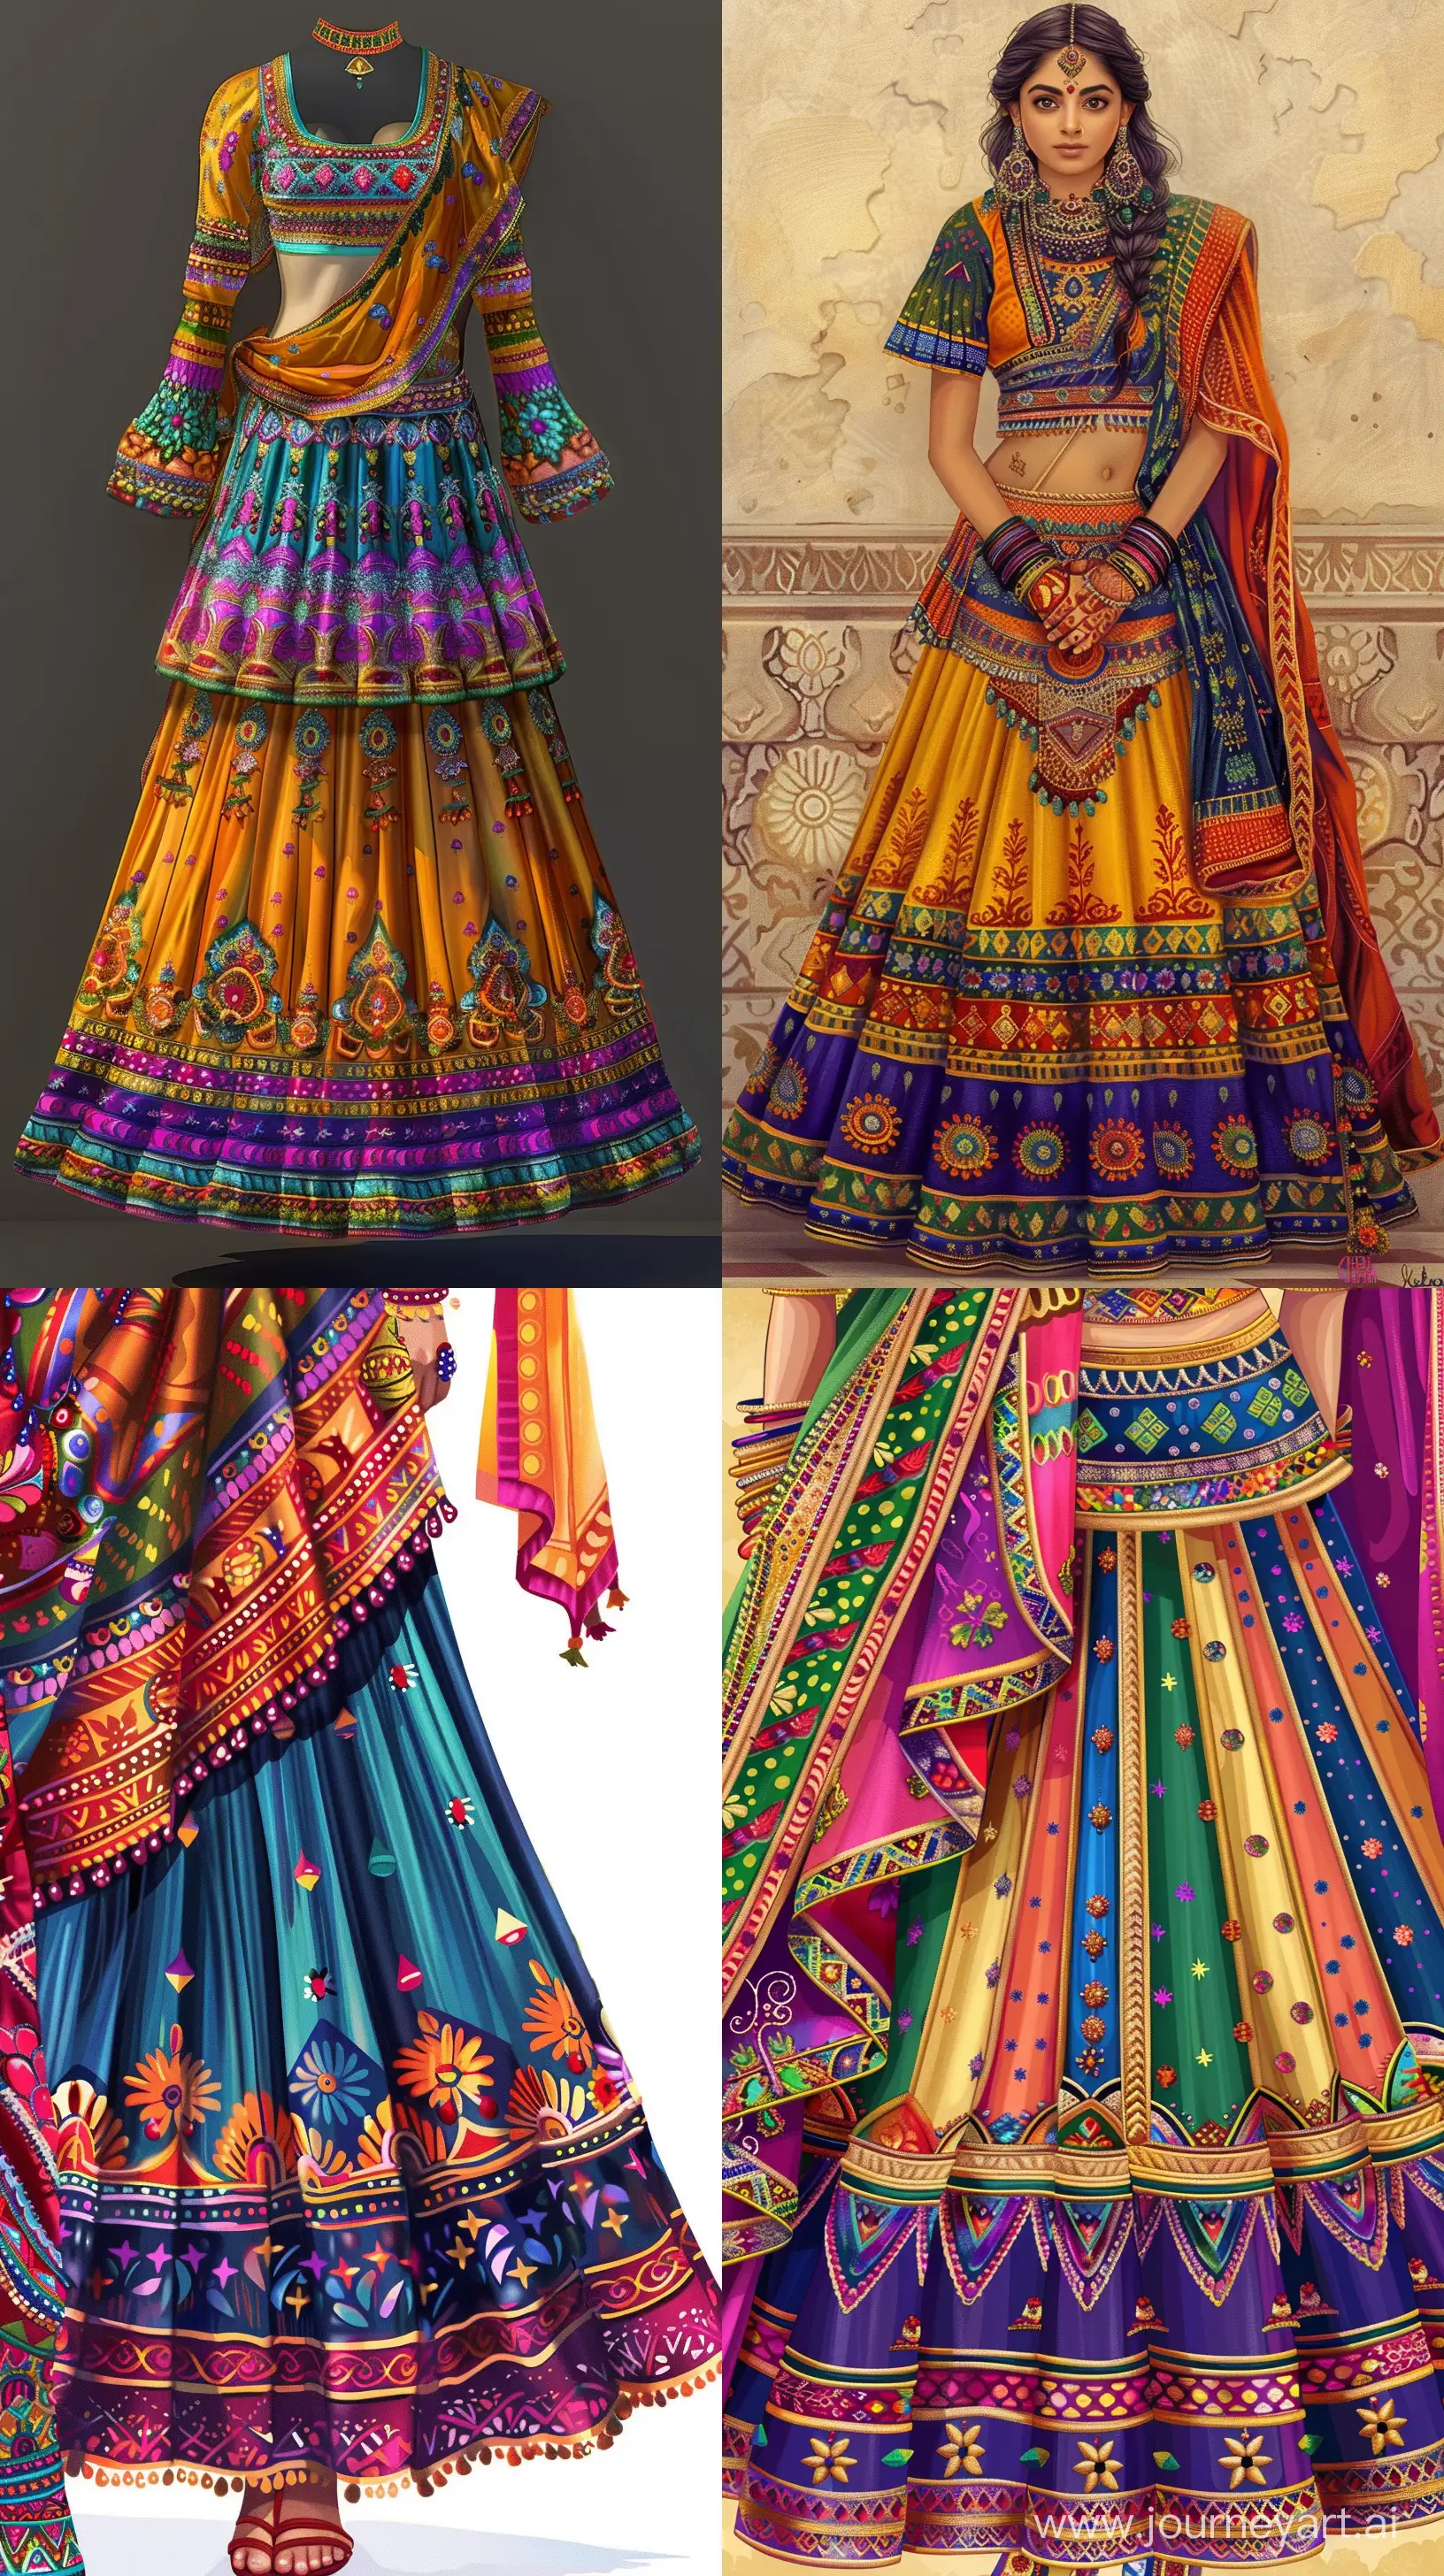 Exquisite-Gujarati-Traditional-Attire-Vibrant-Chaniya-Choli-and-Navratri-Lehenga-Illustration